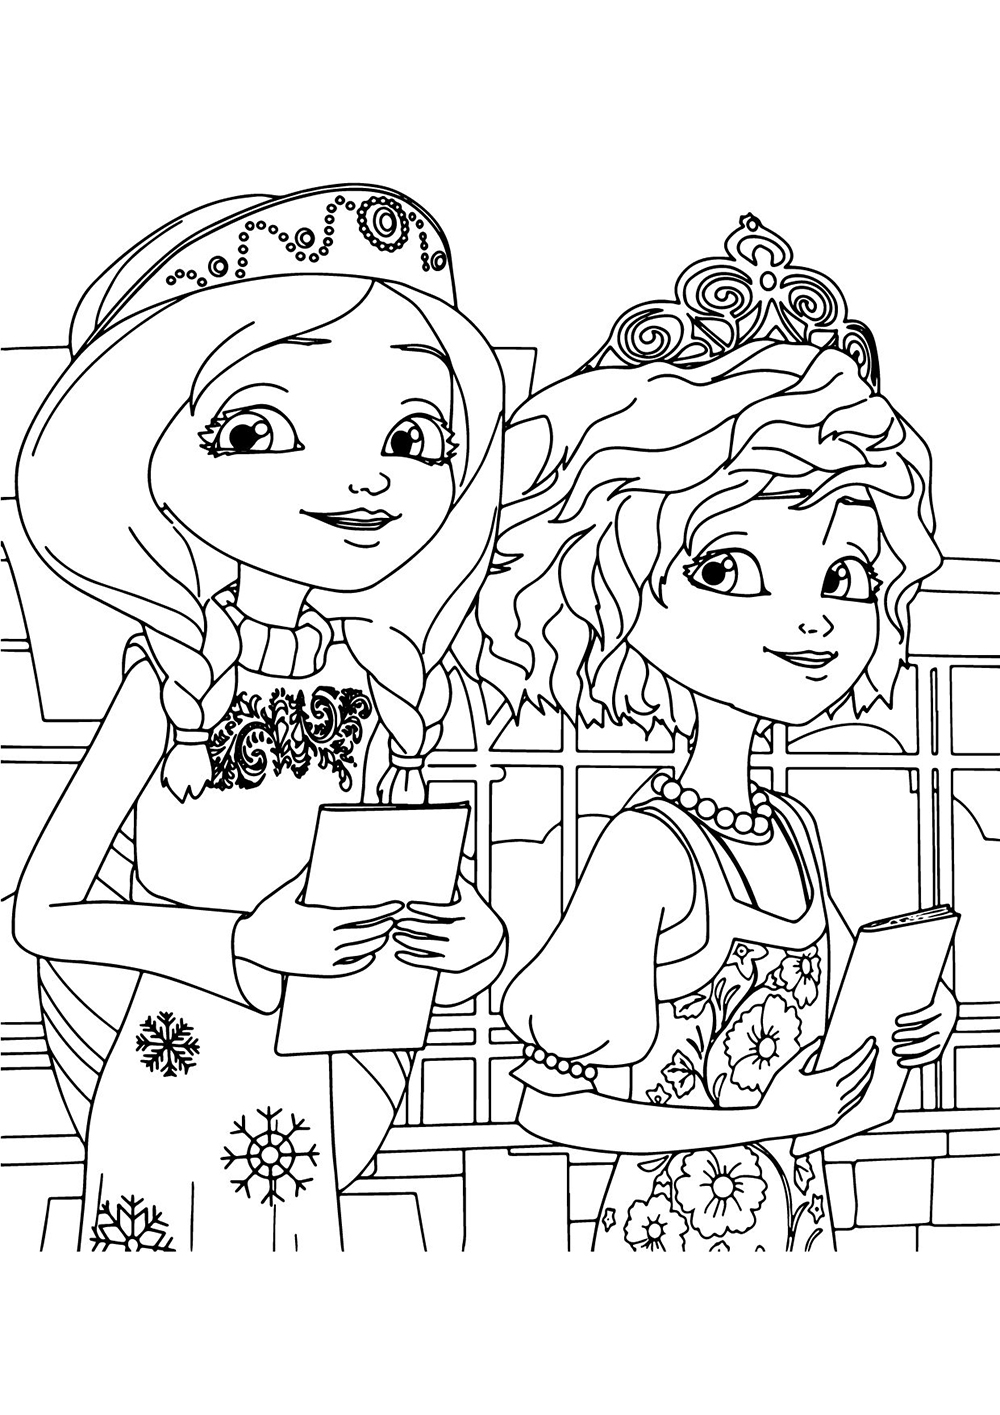 Царевны Алёнка и Варя держат в руках тетрадки